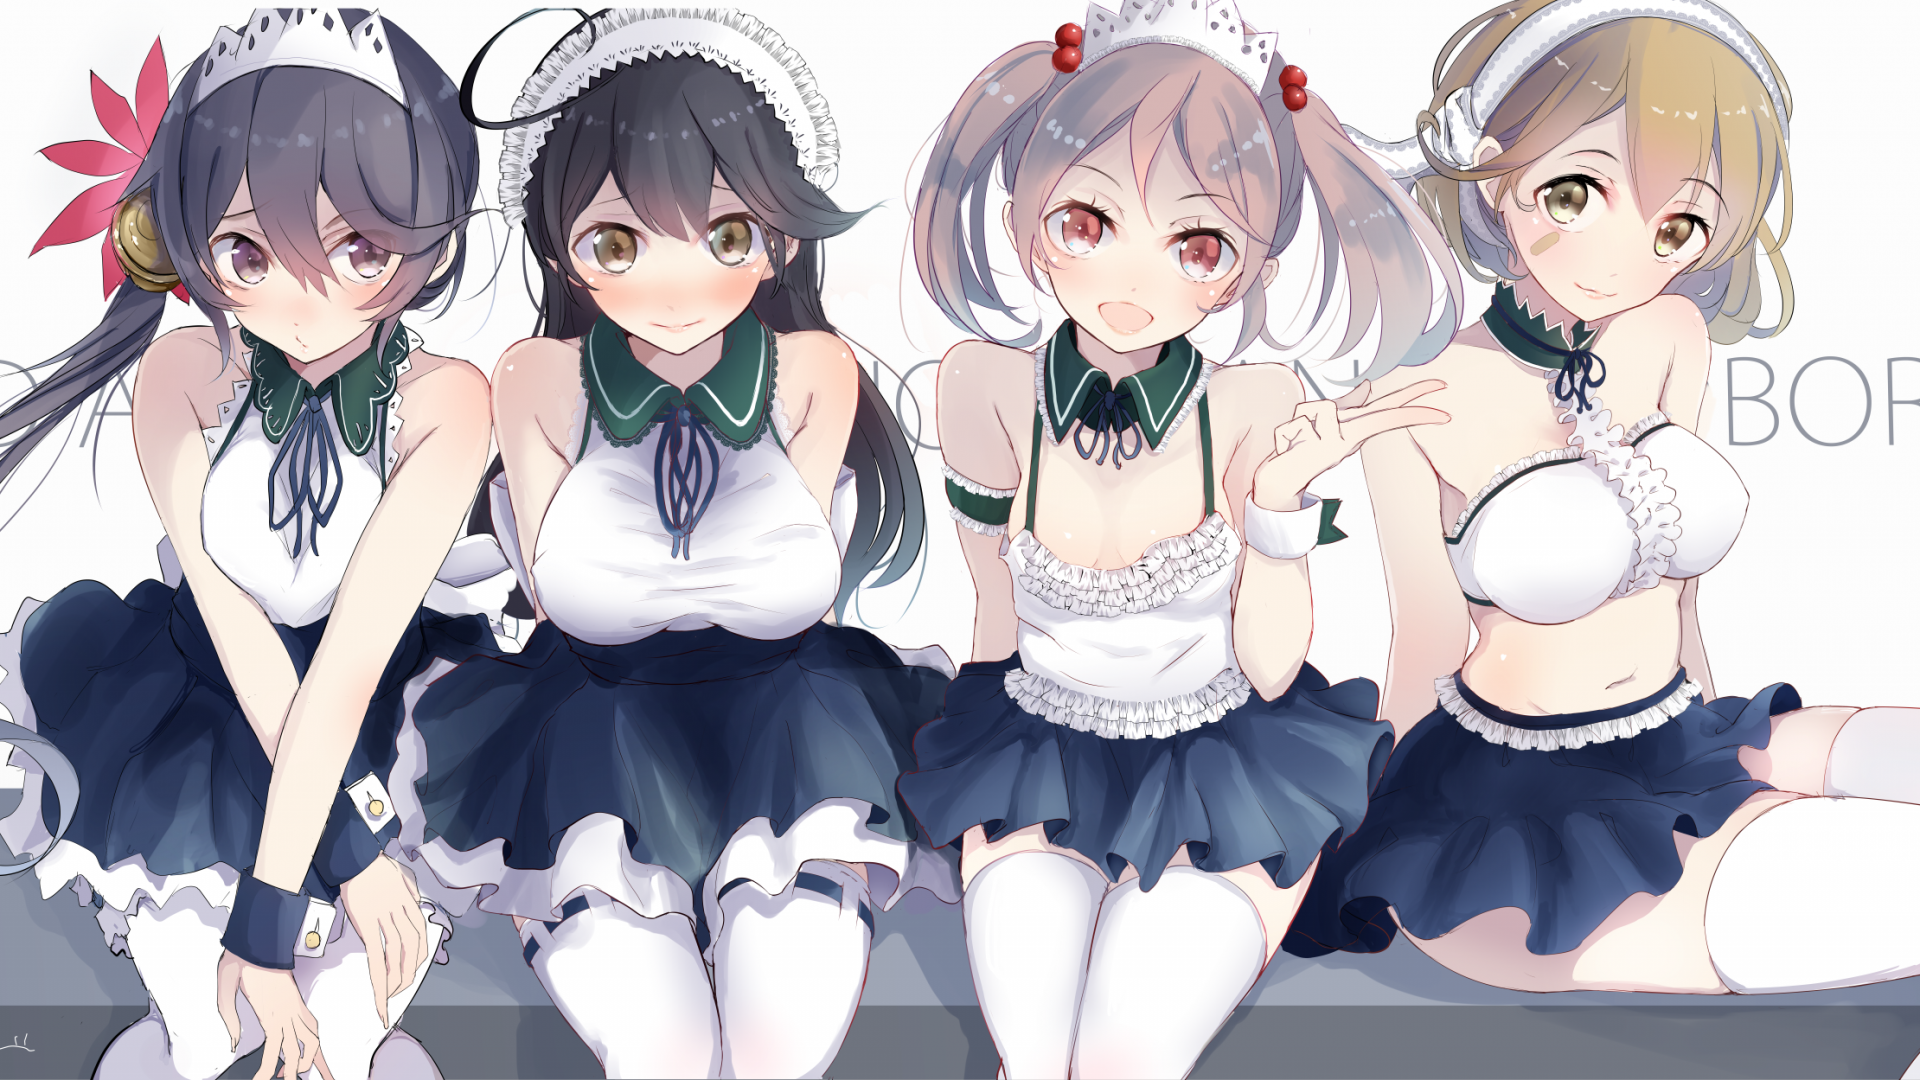 Anime Girls, Group, Skirt The Girl Skirt Anime, Download